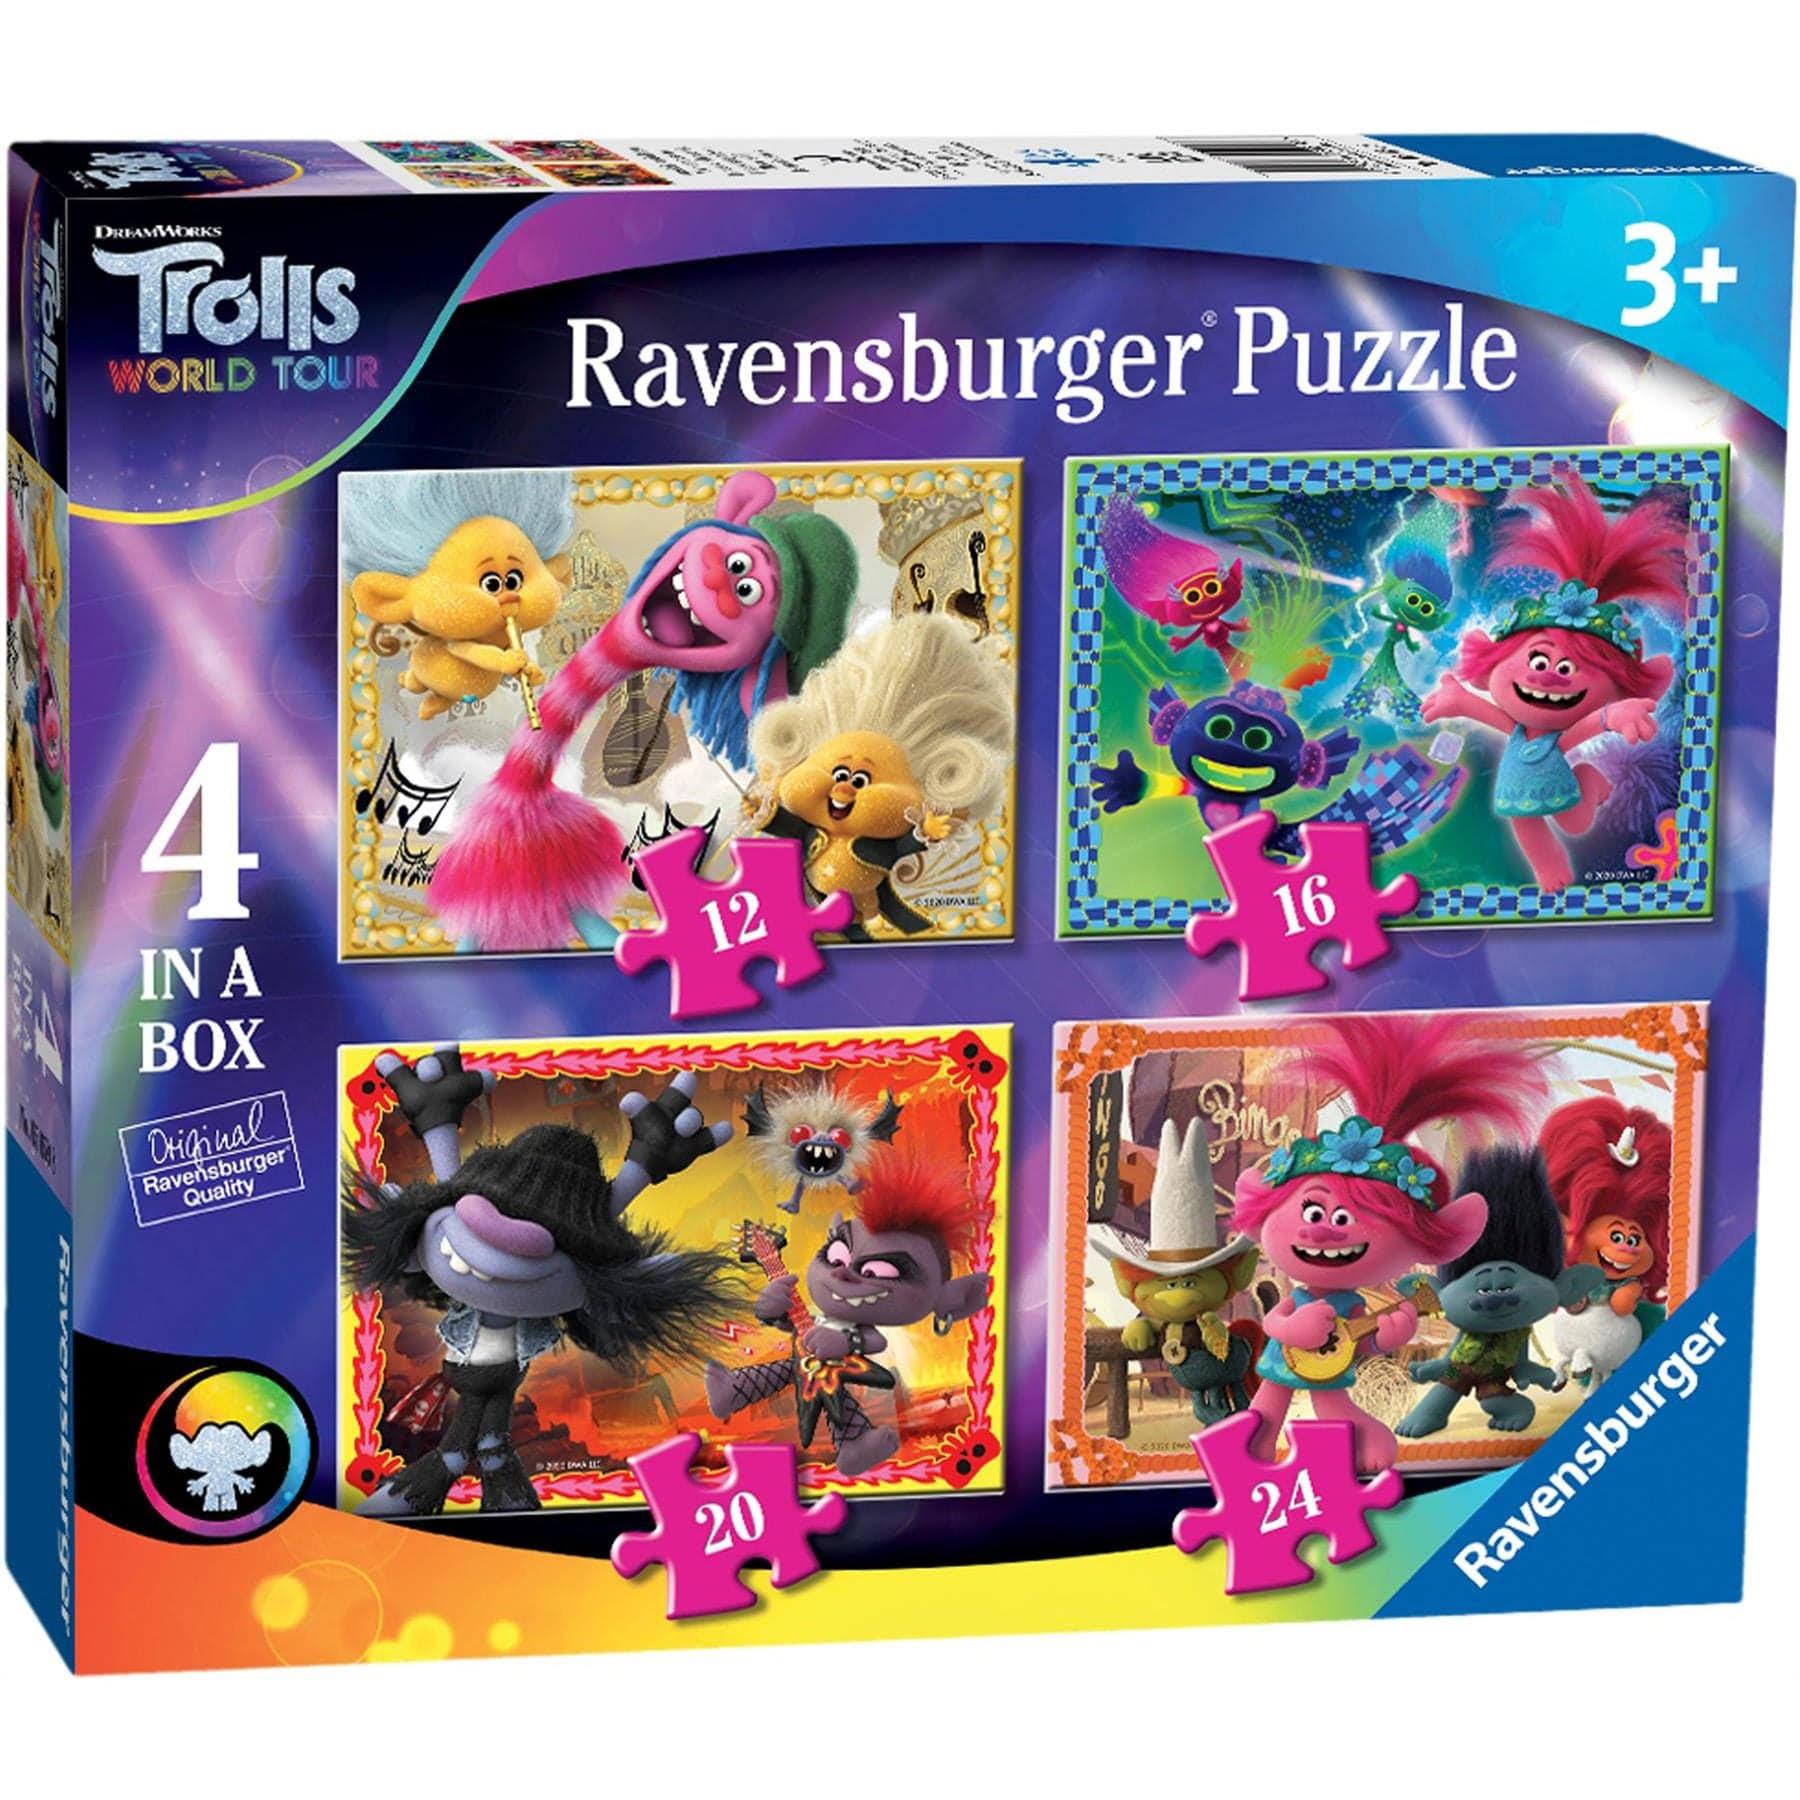 Ravensburger Trolls 3x 49pc Jigsaw Puzzles 